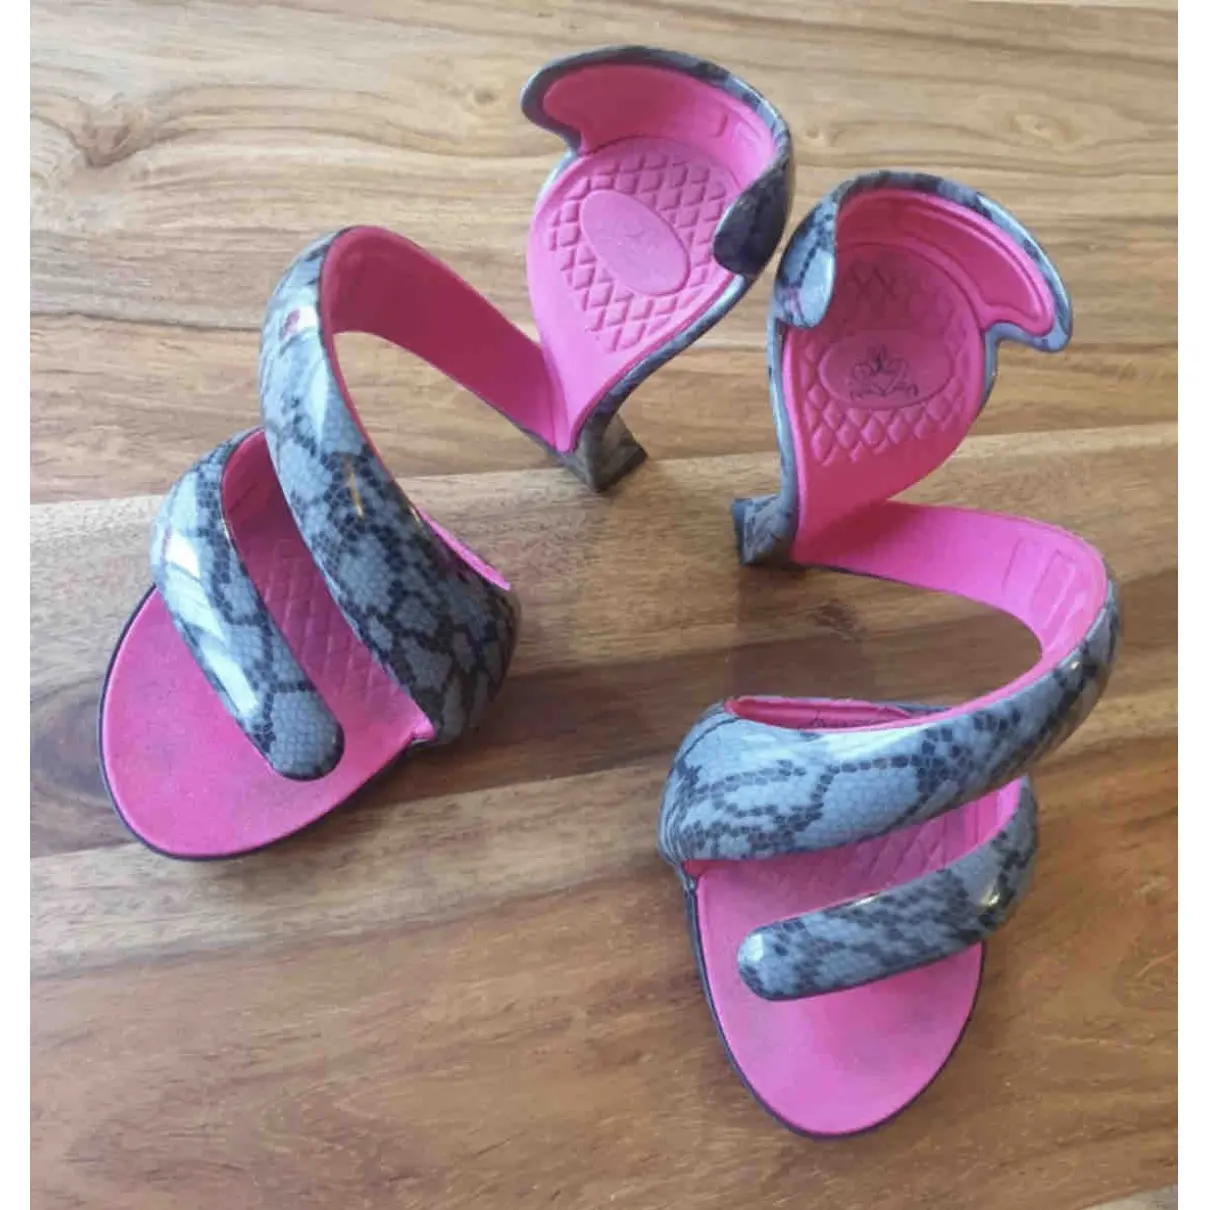 Buy Julian Hakes Leather heels online